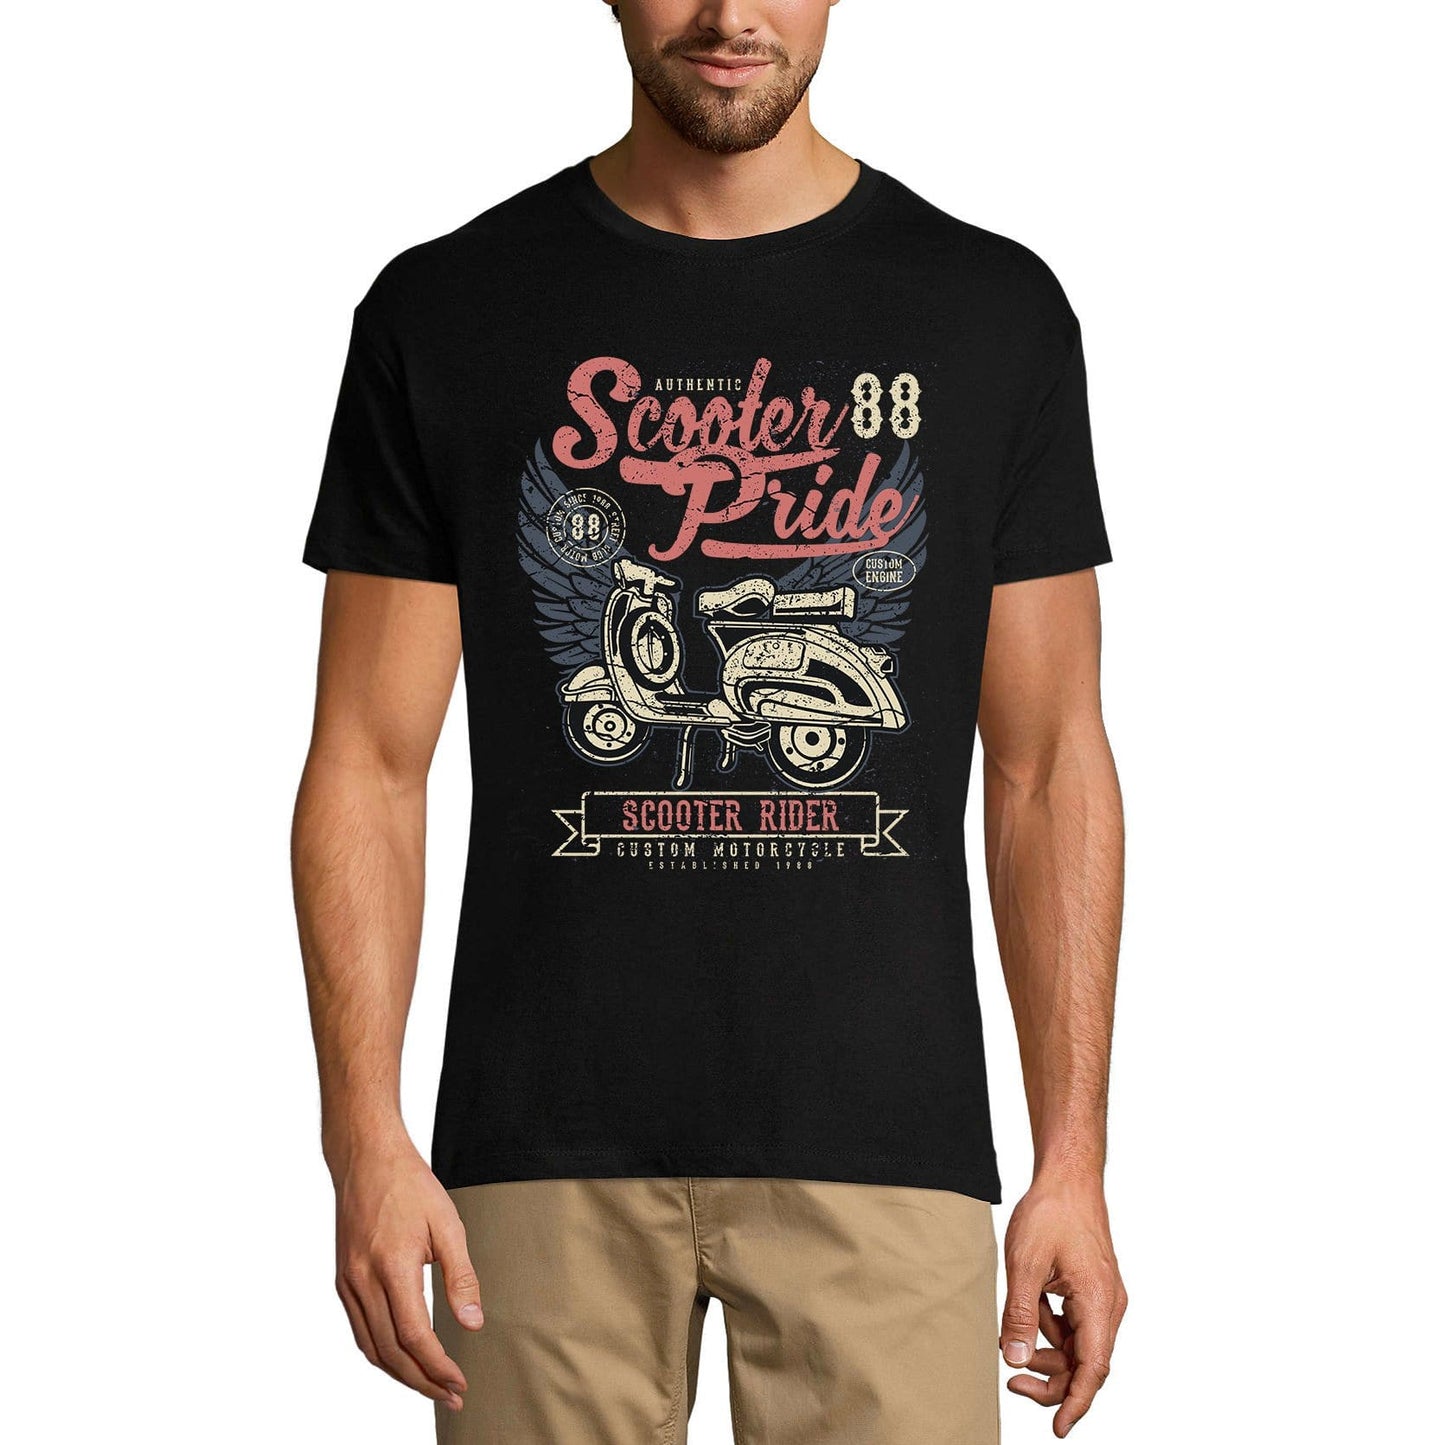 ULTRABASIC Men's Graphic T-Shirt Scooter Pride Rider - Vintage Motorcycle Tee Shirt